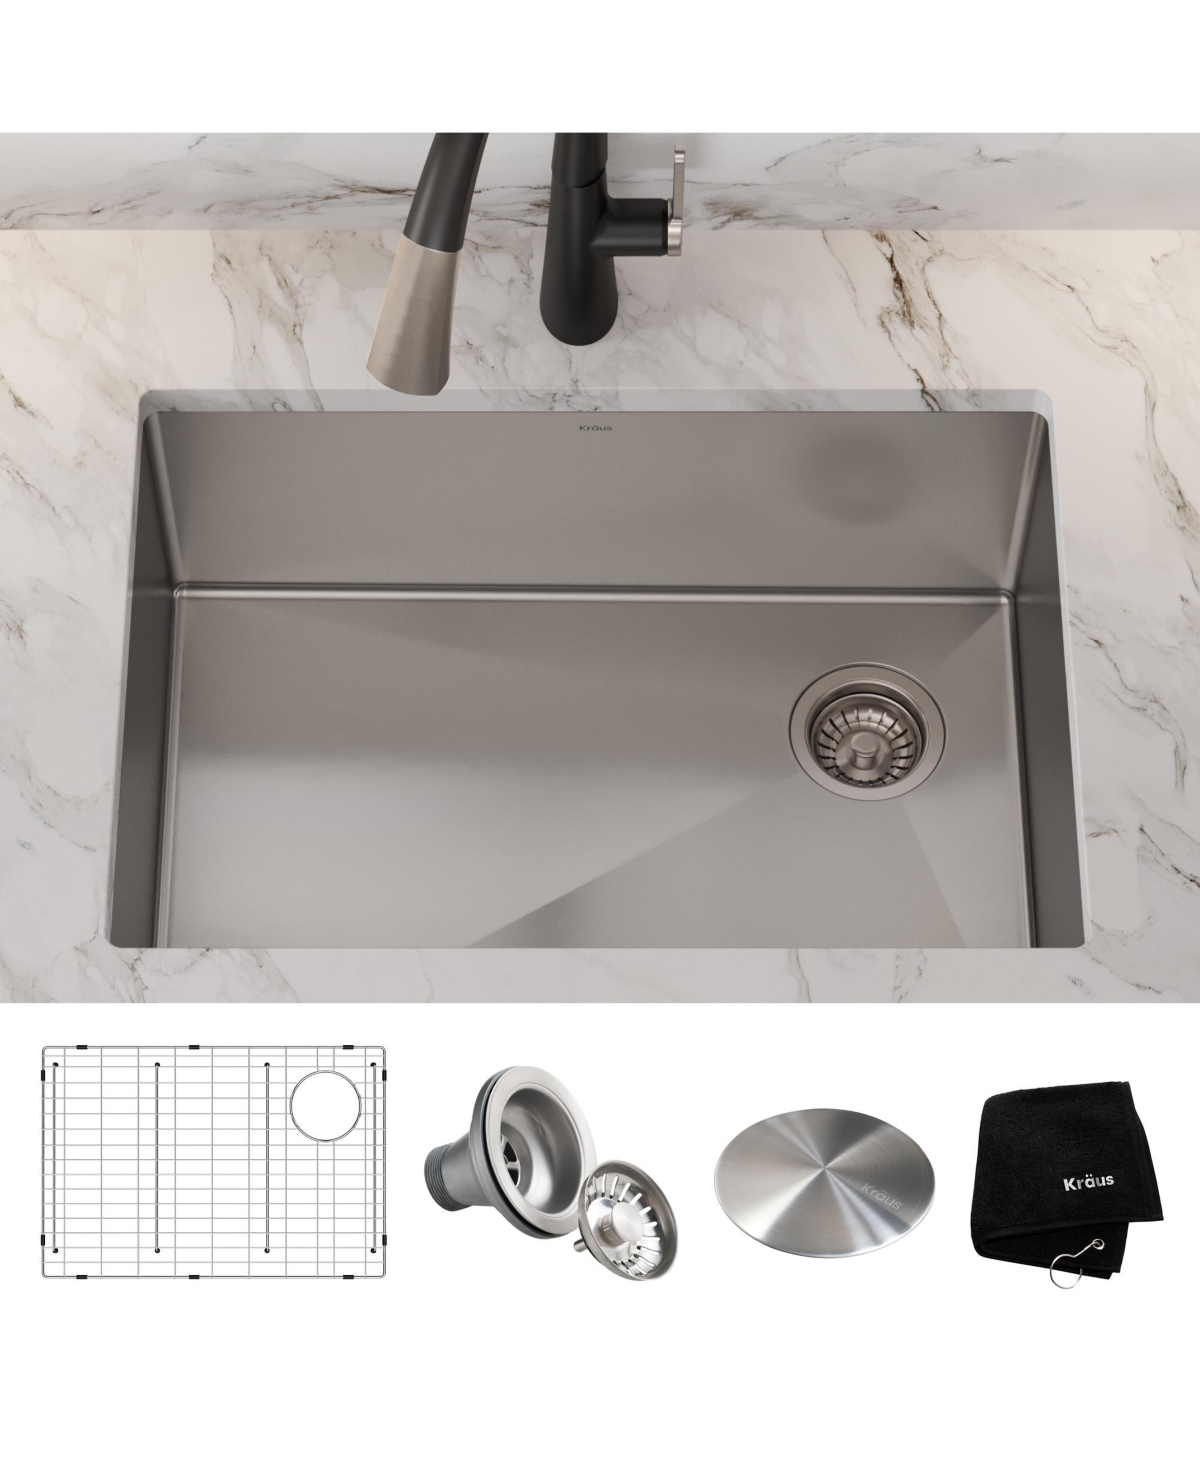 Standart Pro 27 in. 16 Gauge Undermount Single Bowl Stainless Steel Kitchen Sink - Stainless steel